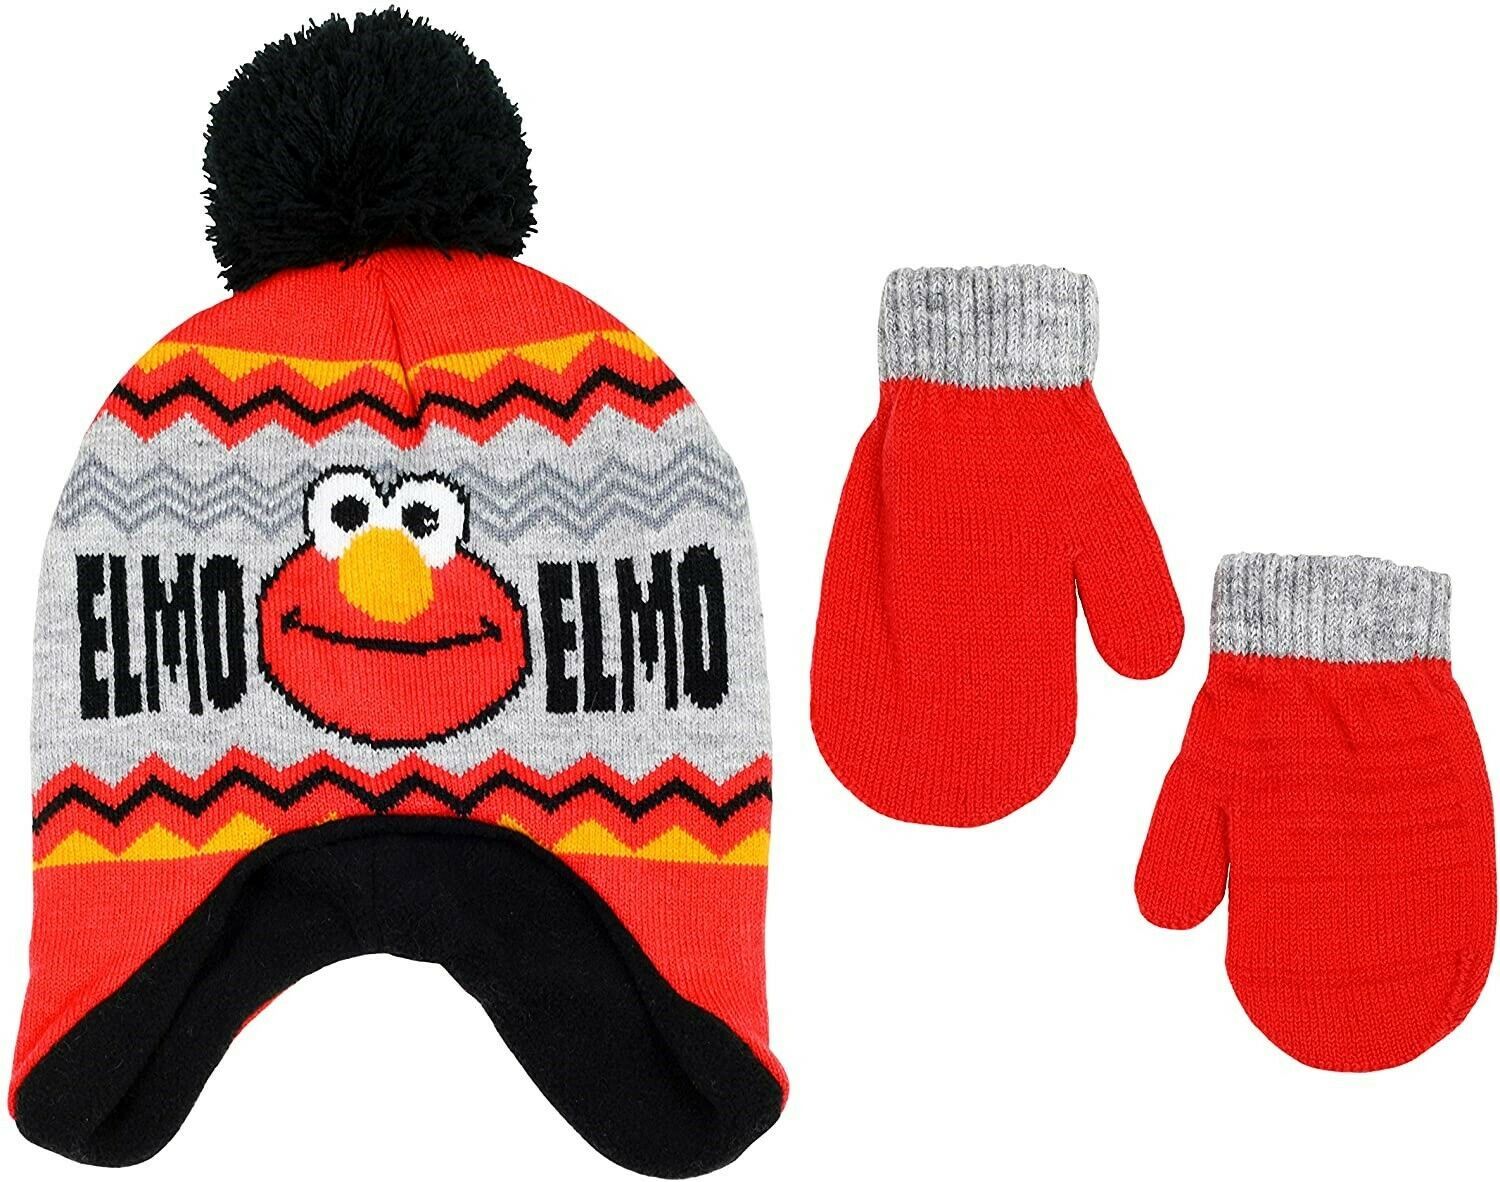 Elmo sesame street fleece lined peruvian hat and mittens set w/pompom